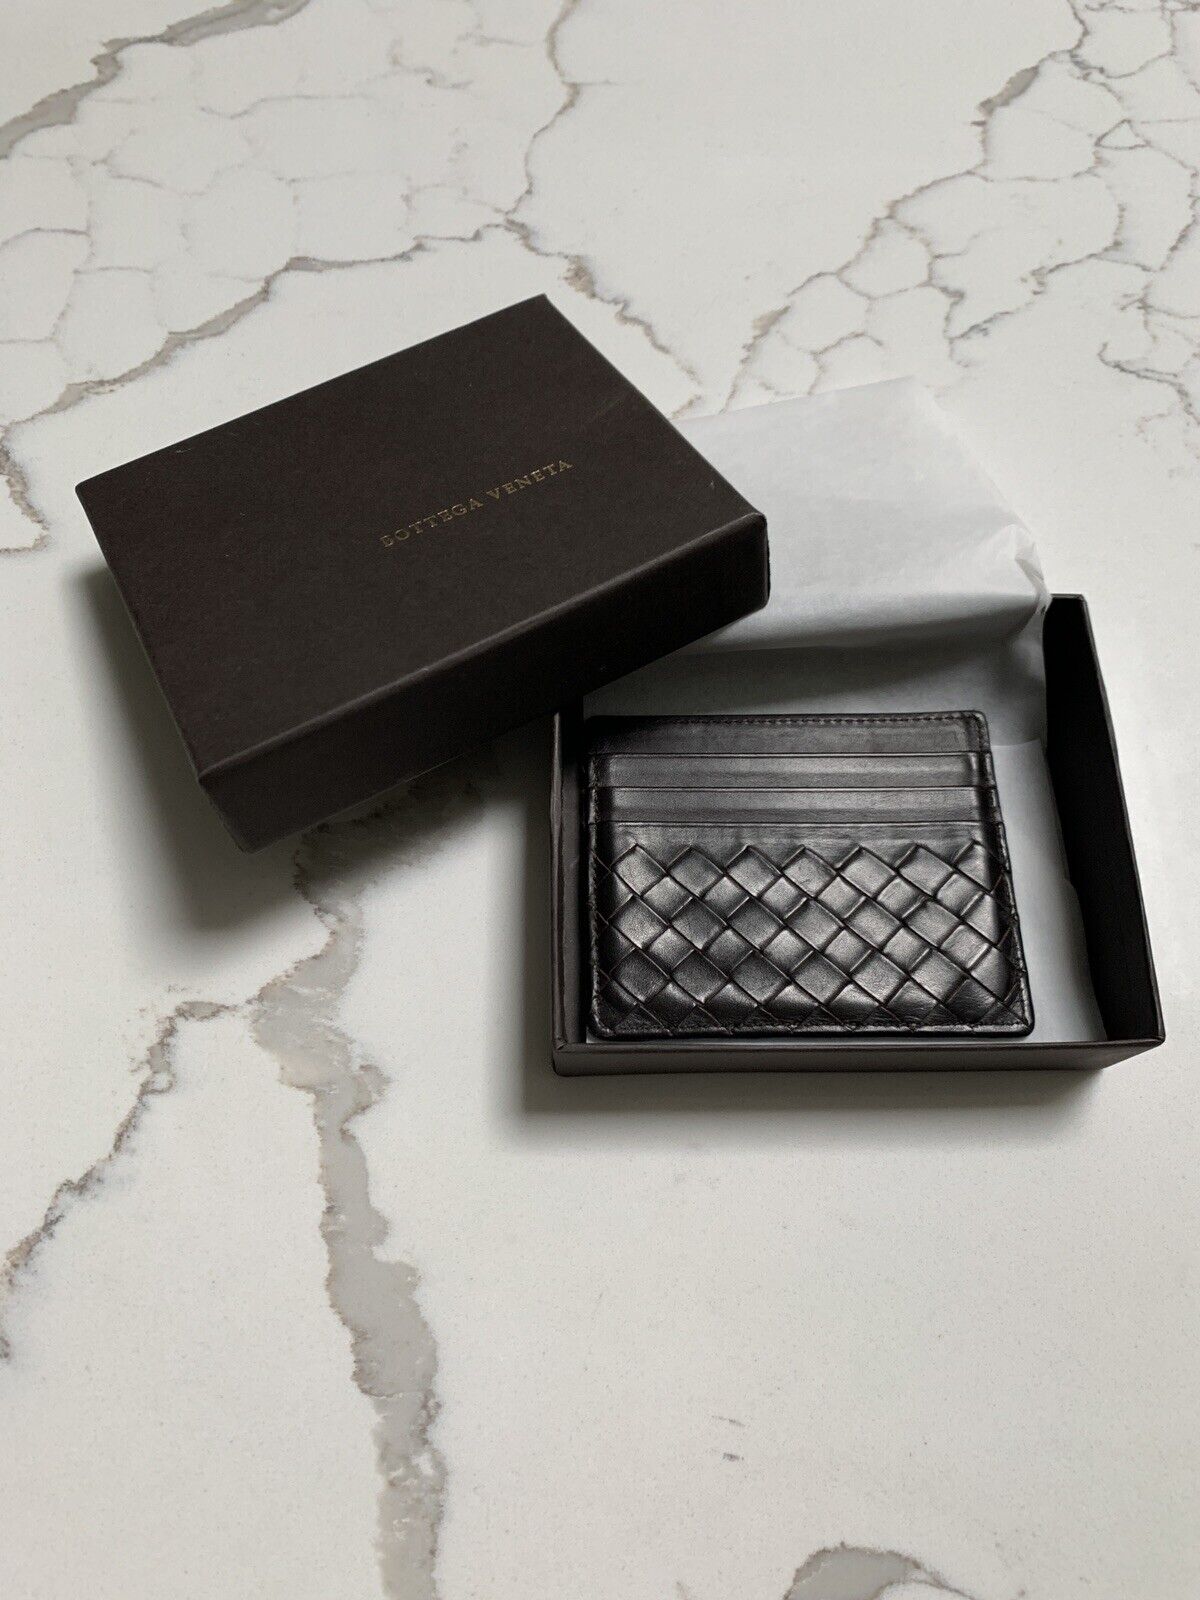 Auth Bottega Veneta Card Holder Wallet Chocolate Intrecciato Leather in box